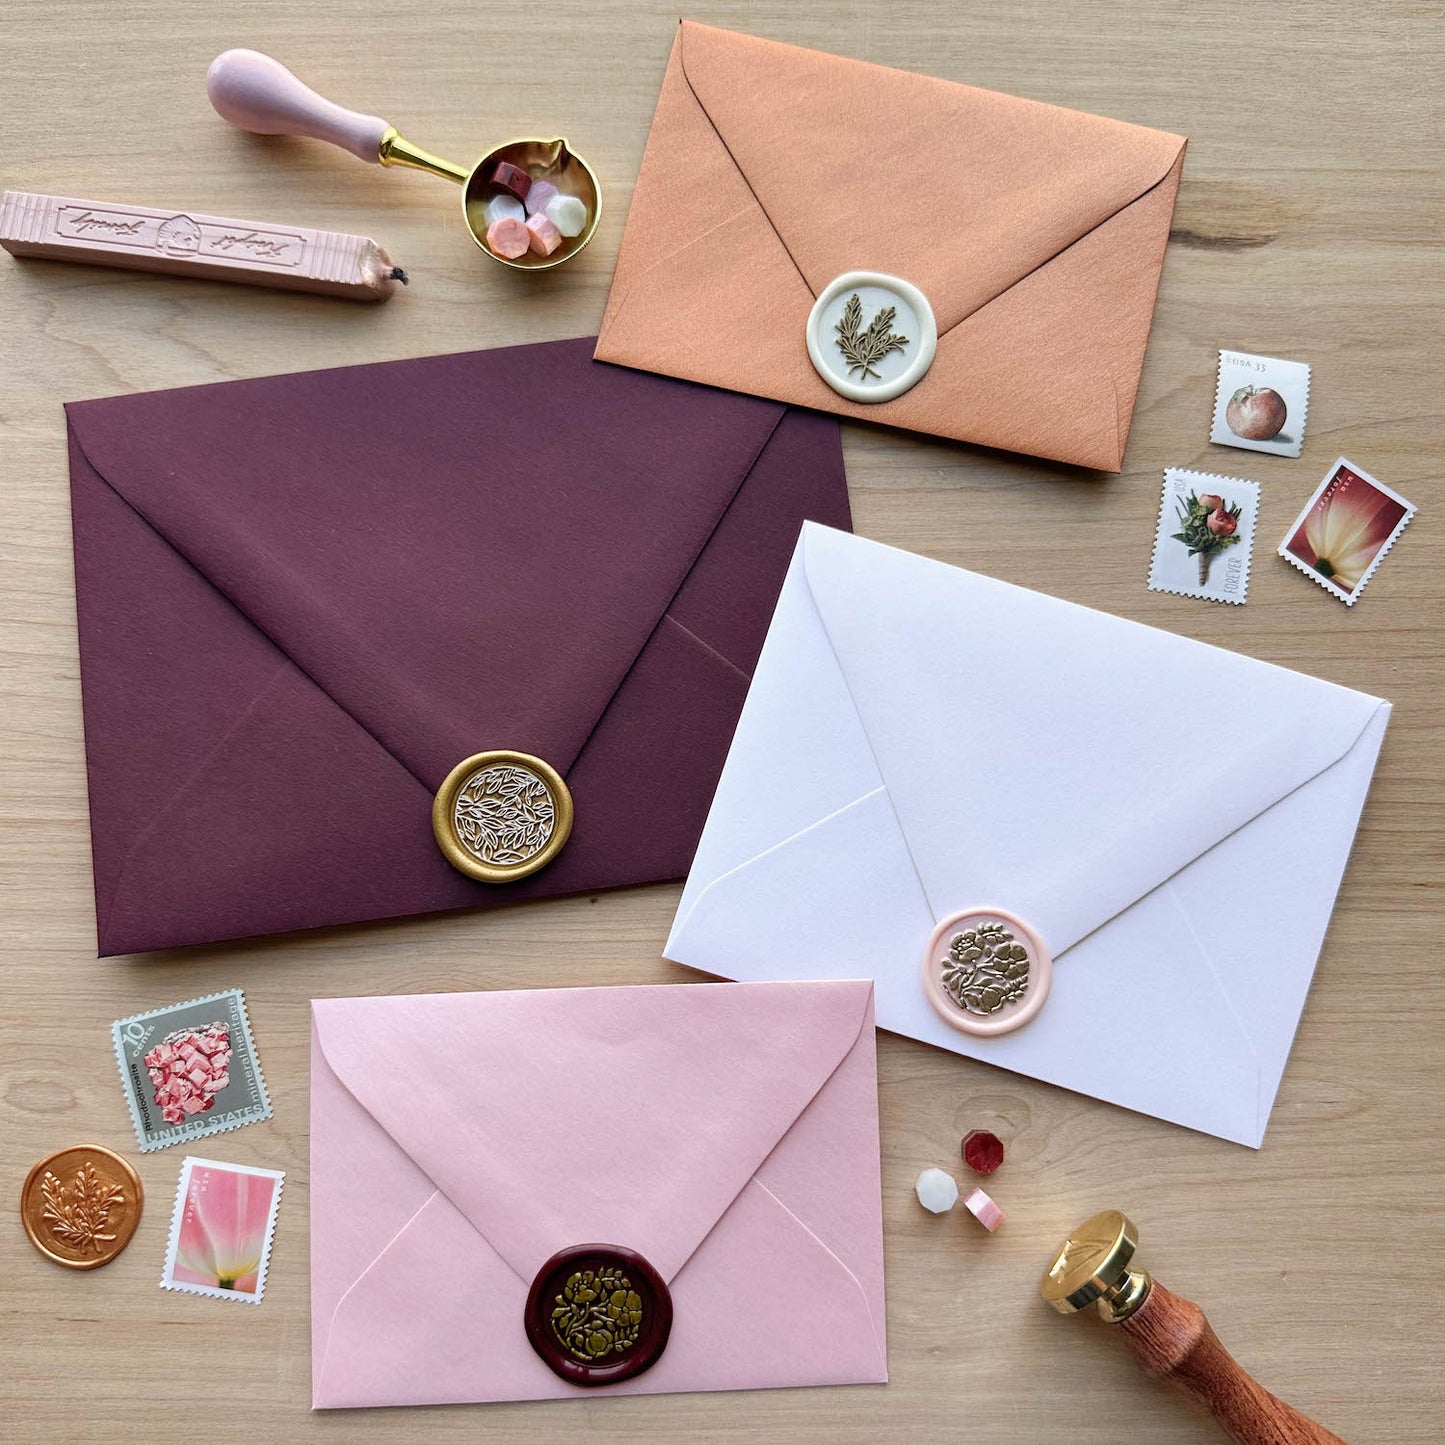 Claret, White Frost, Rose Quartz, and Copper envelopes with wax seals